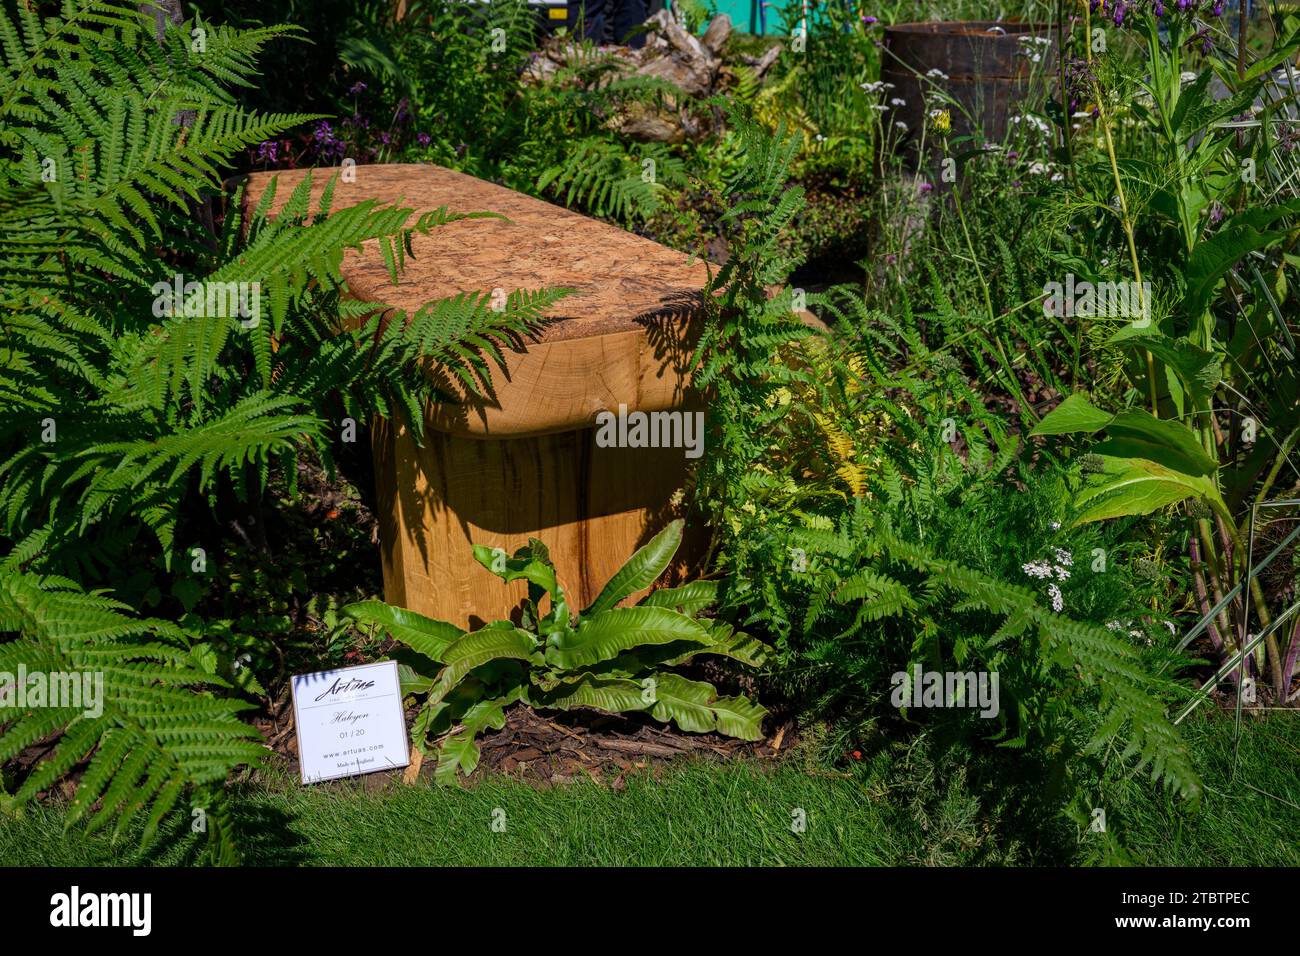 Elementos de terraza urbana jardín de entrada de competición (muebles, plantas de bosques, hojas, follaje) - RHS Tatton Park Flower Show 2023, Cheshire Inglaterra Reino Unido. Foto de stock